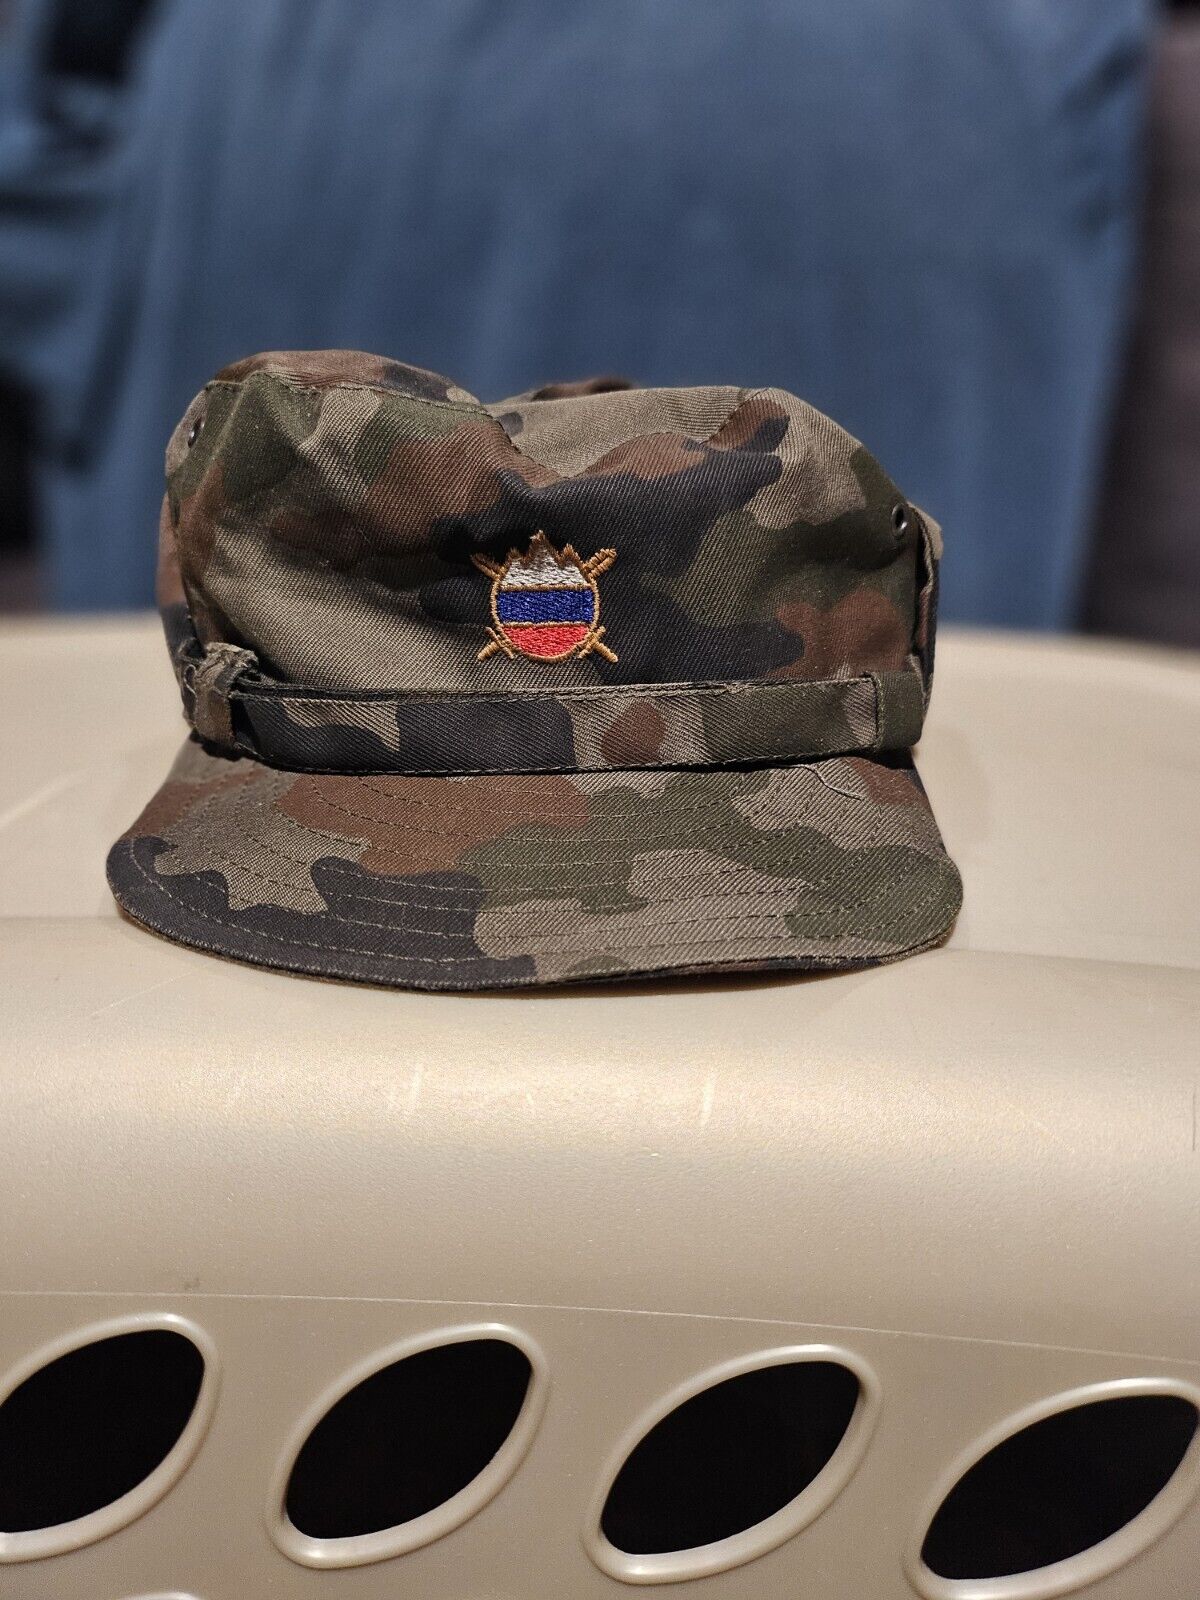 Original Slovenia Slovenian Army M91 Oakleaf Camouflage Combat Cap Hat 